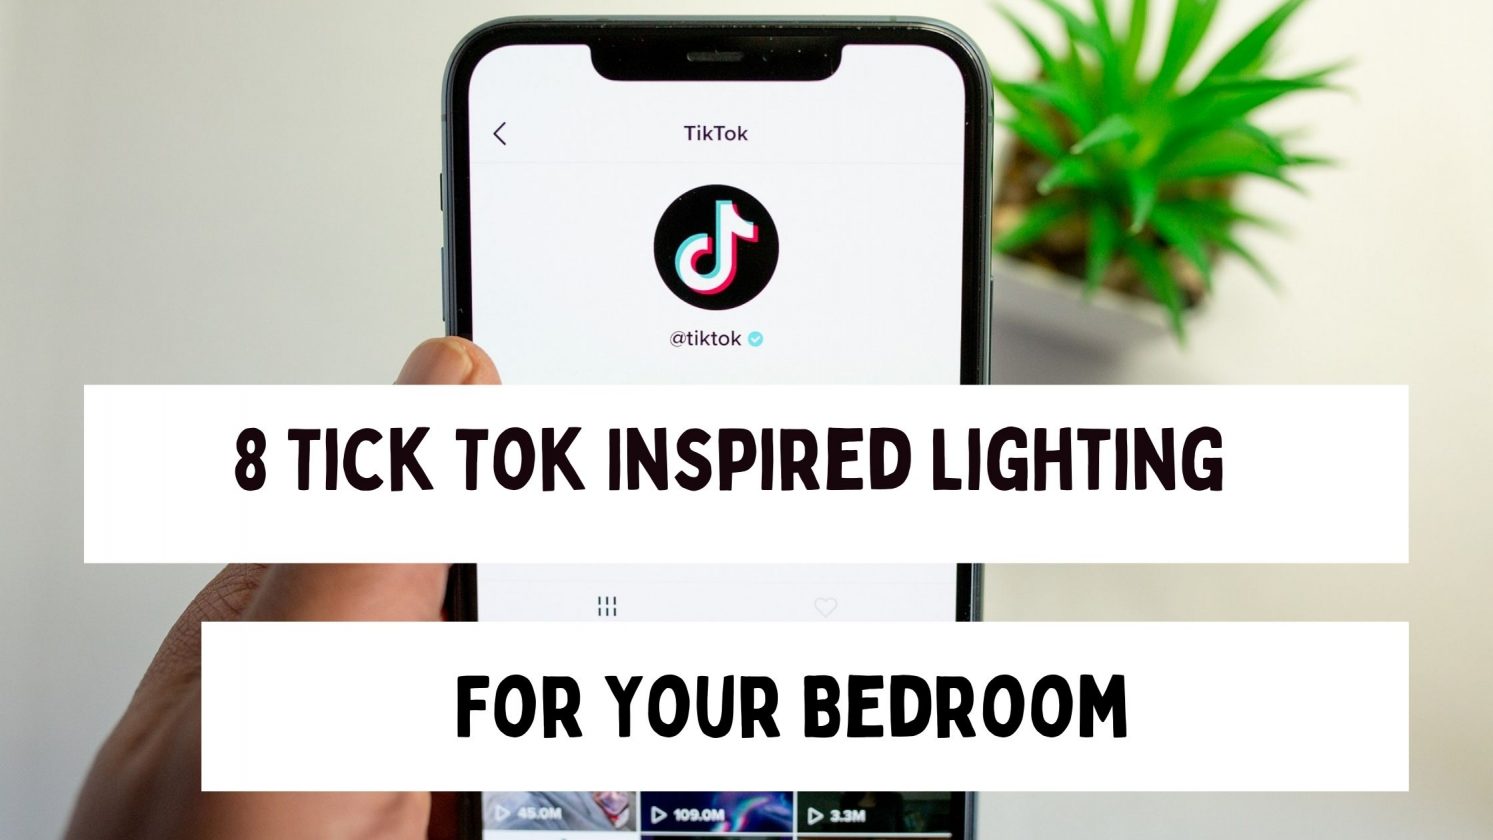 Tick Tok Inspired Lighting For Your Bedroom